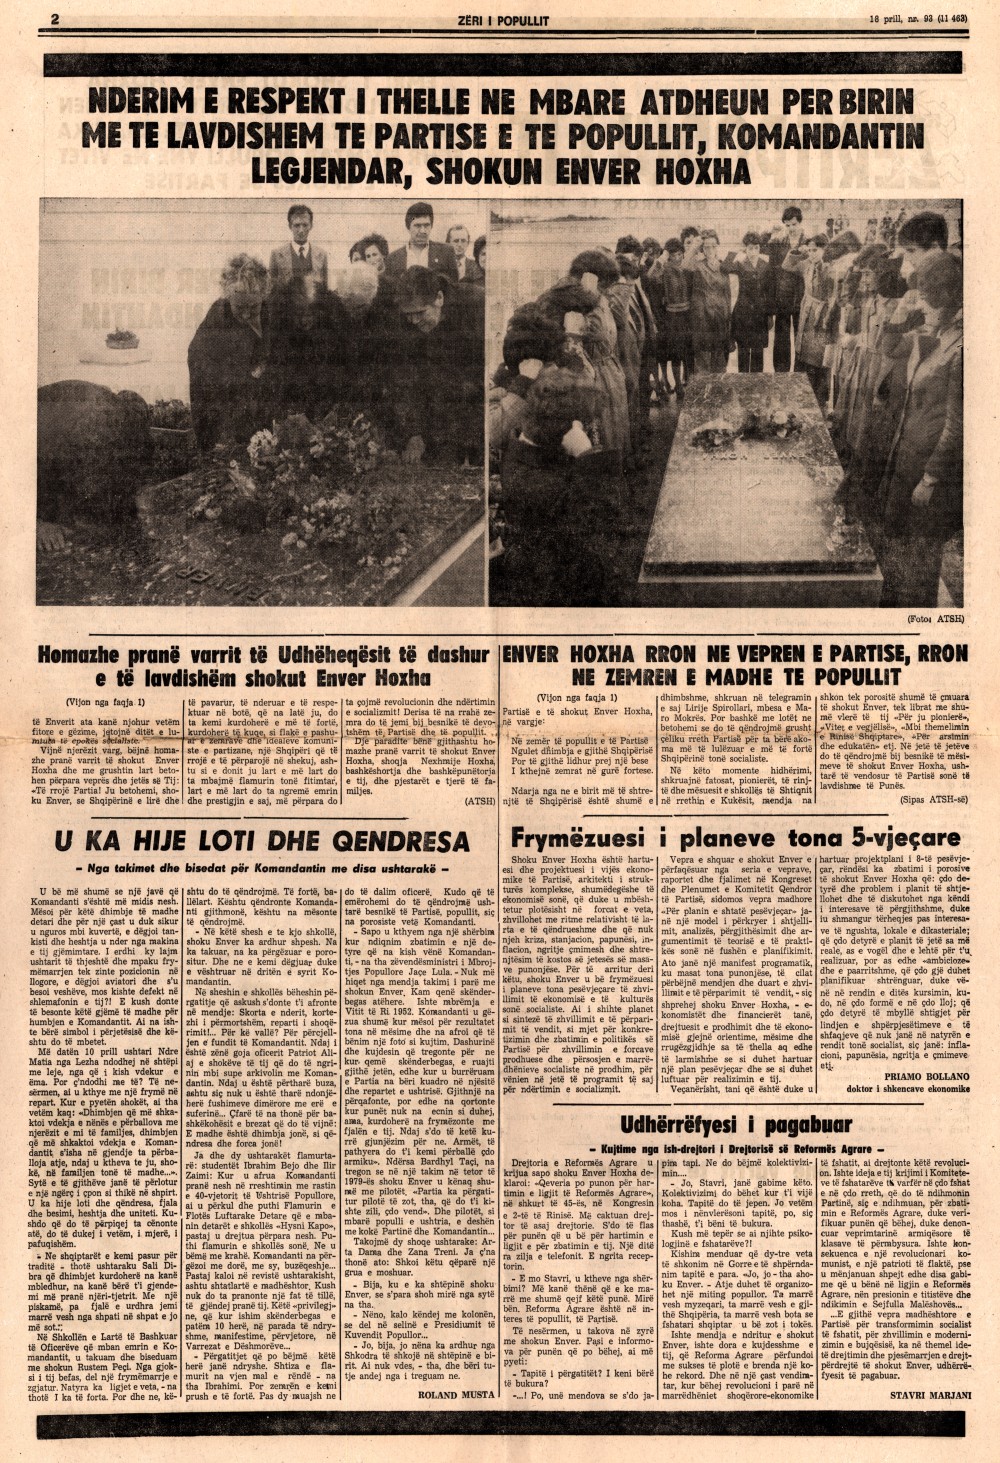 Газета "Зери и популлит" от 18 апреля 1985 года (вторая полоса)